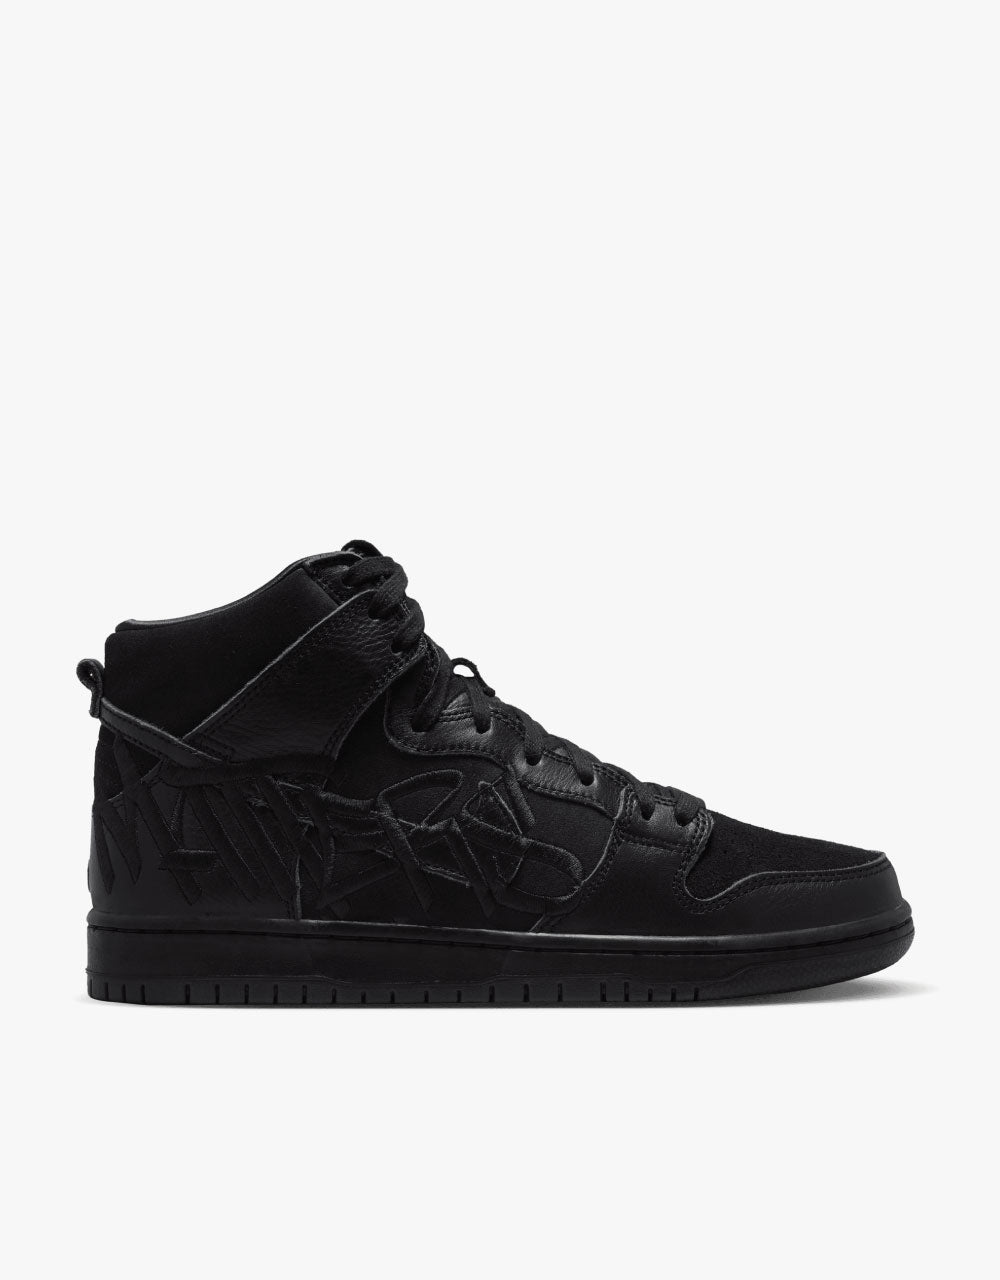 Nike SB 'Faust' Dunk High Pro QS Skate Shoes - Black/Black